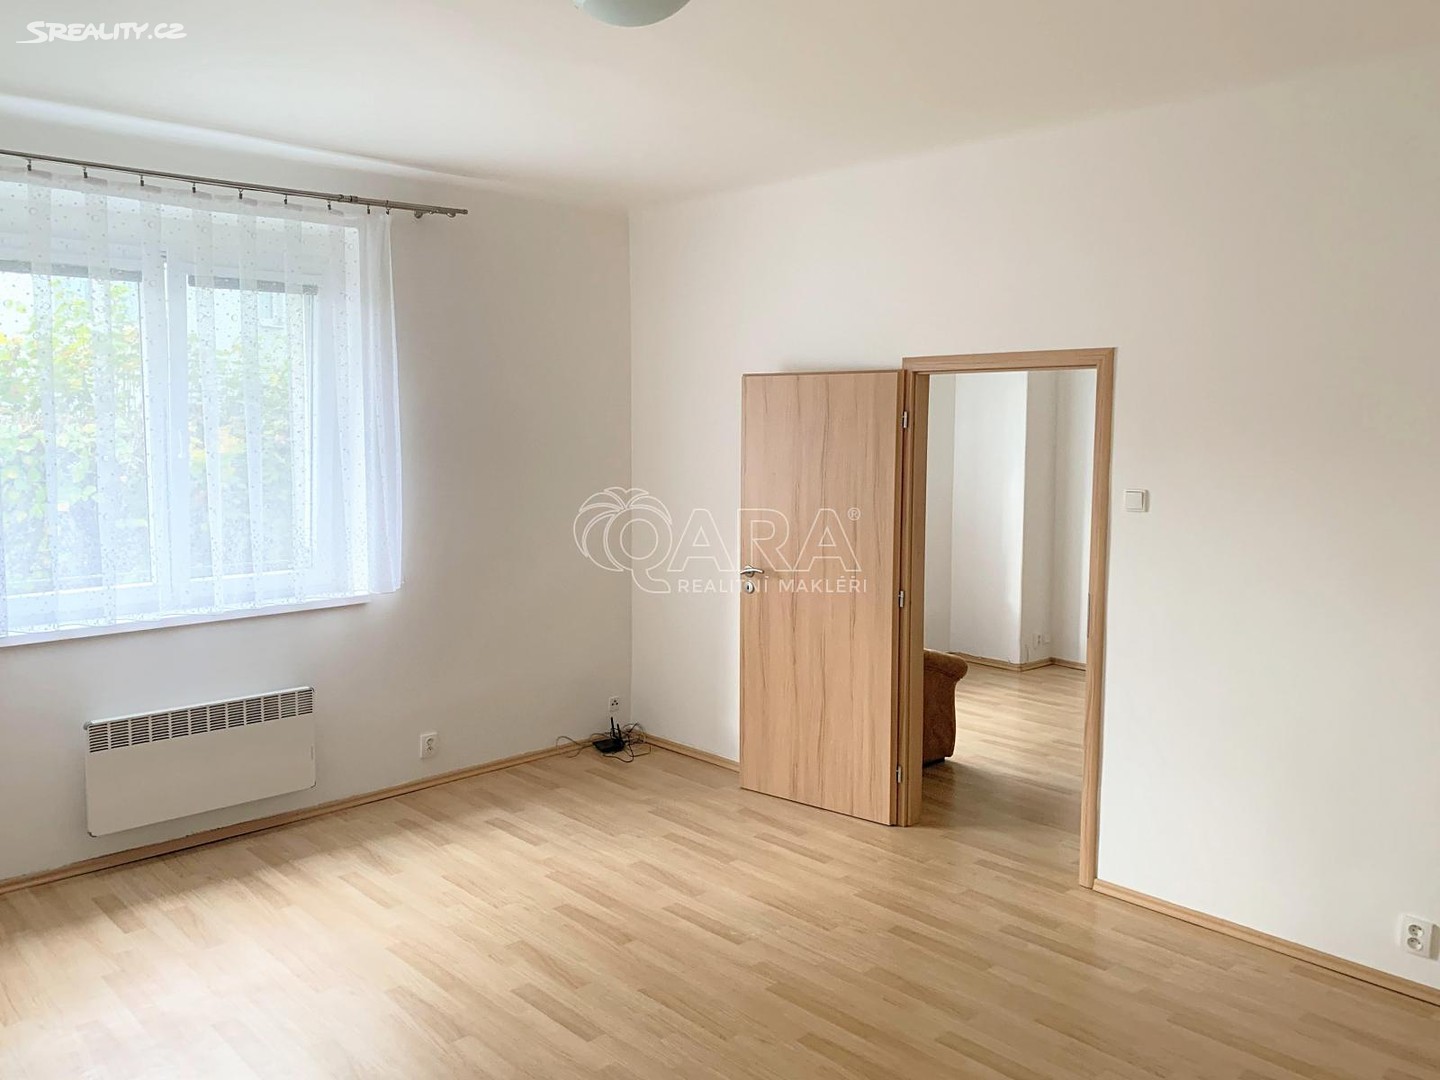 Prodej bytu 2+kk 46 m², Evropská, Praha 6 - Veleslavín